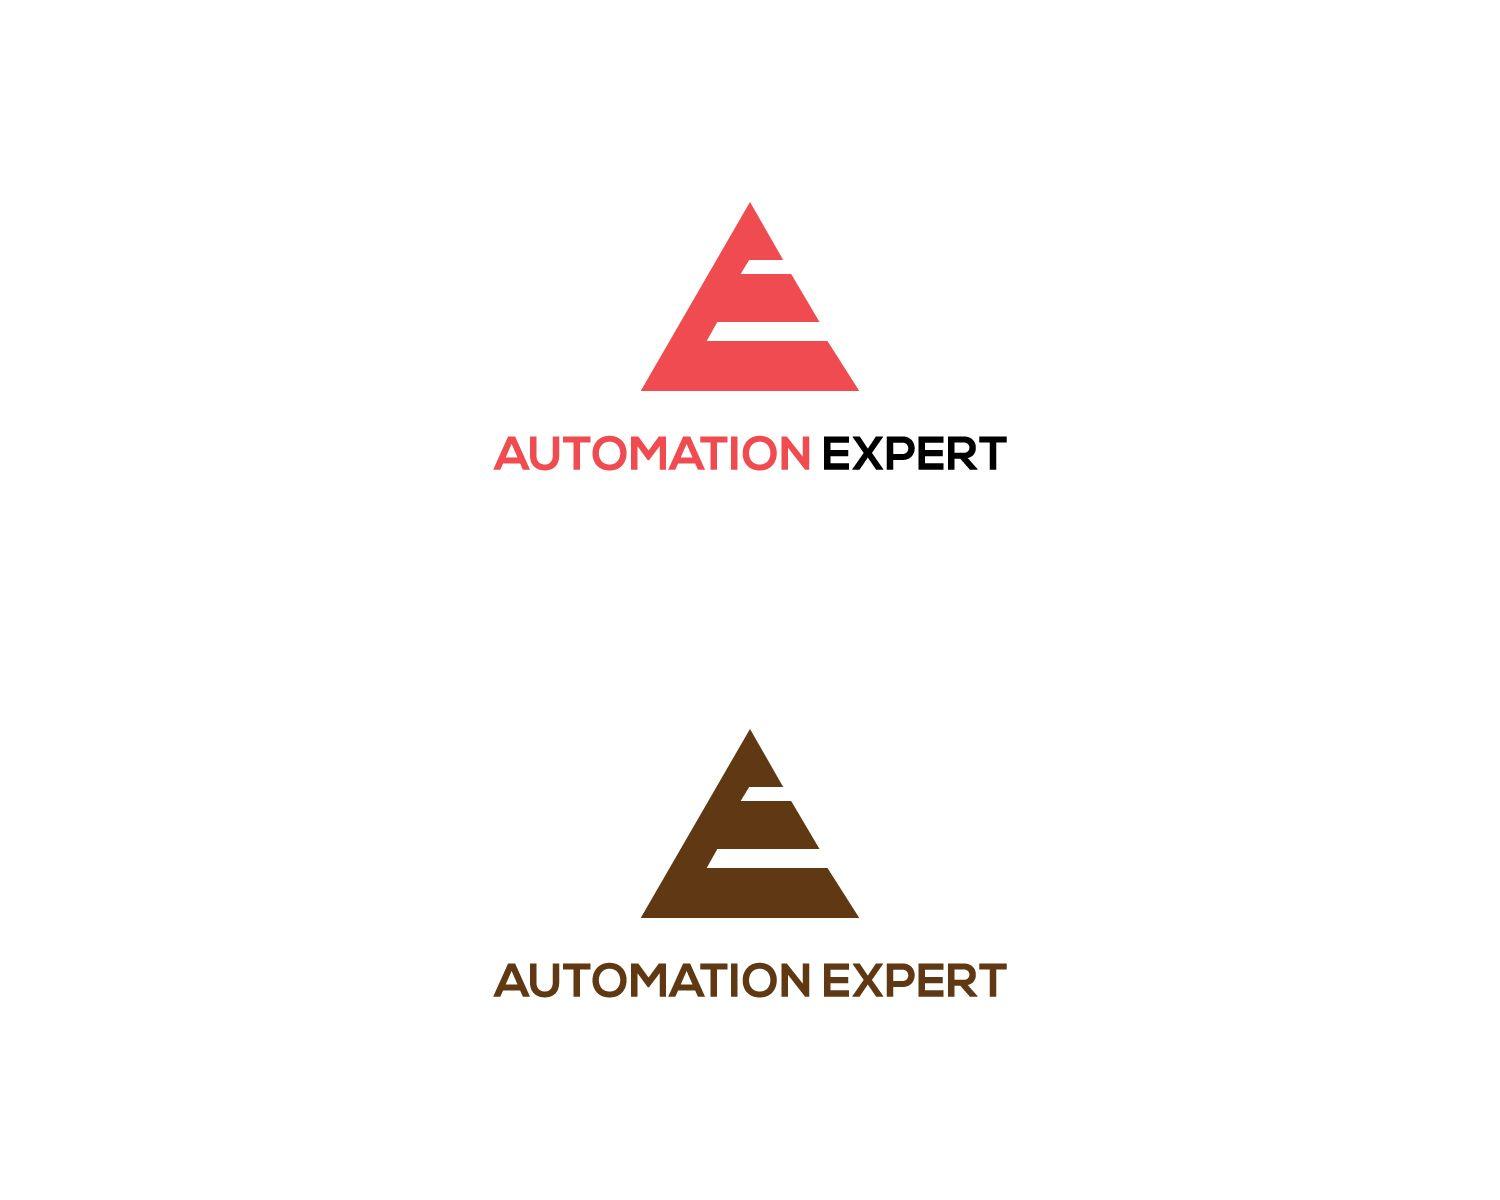 Triangle Automotive Logo - Modern, Professional, Automotive Logo Design for Automation expert